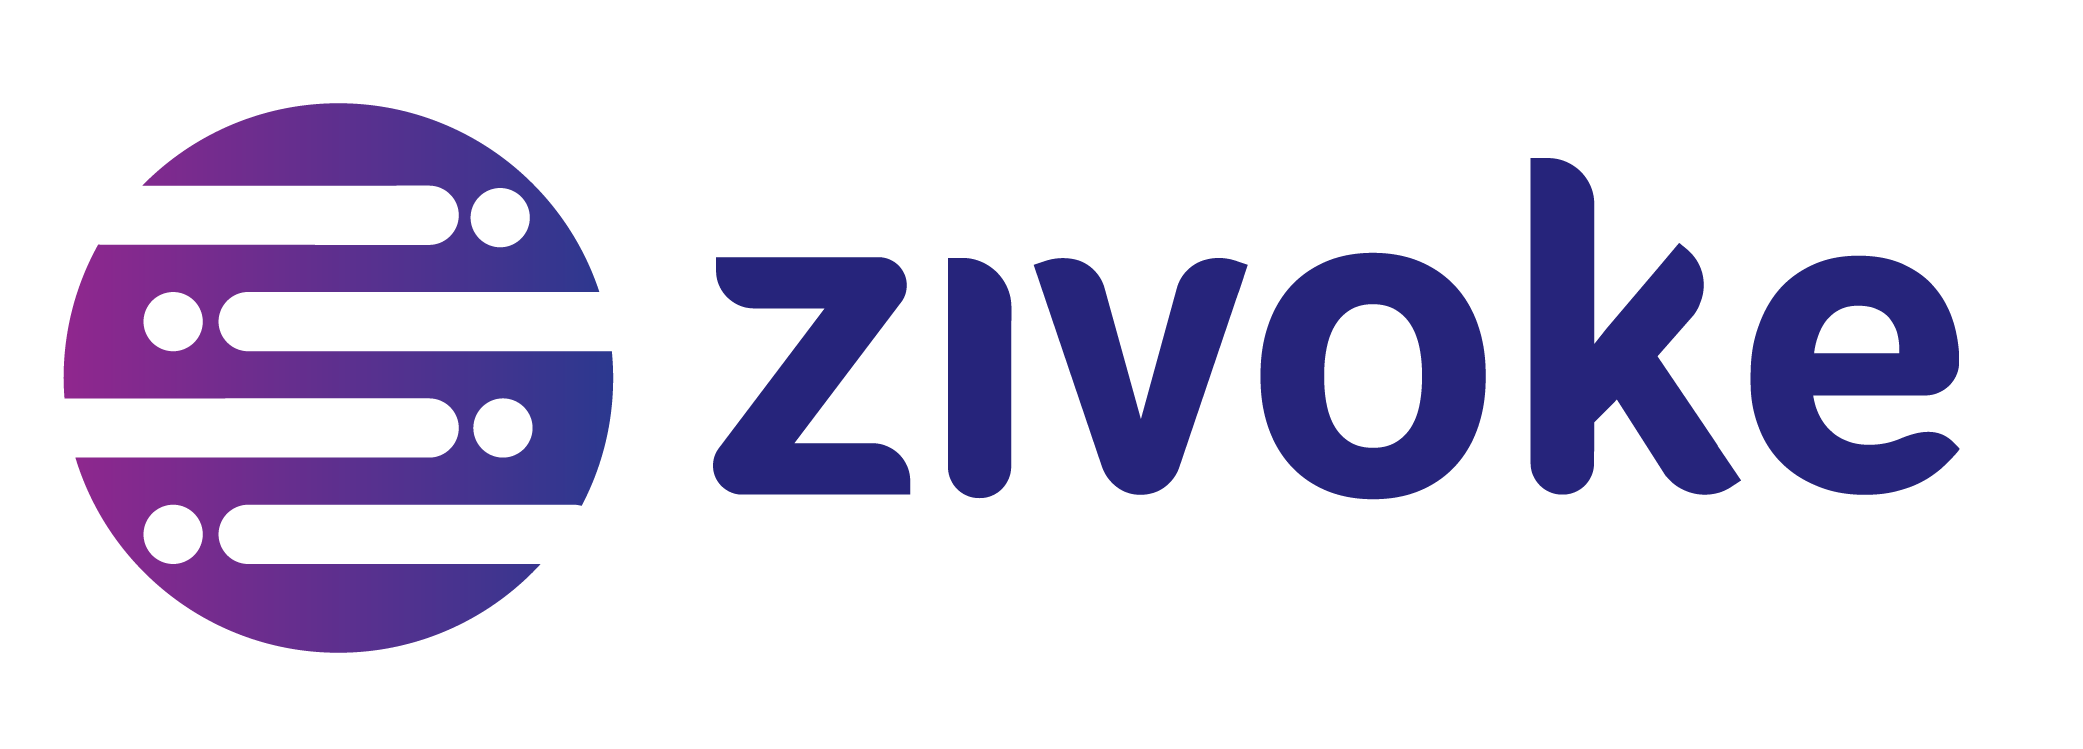 Zivoke_logo-03